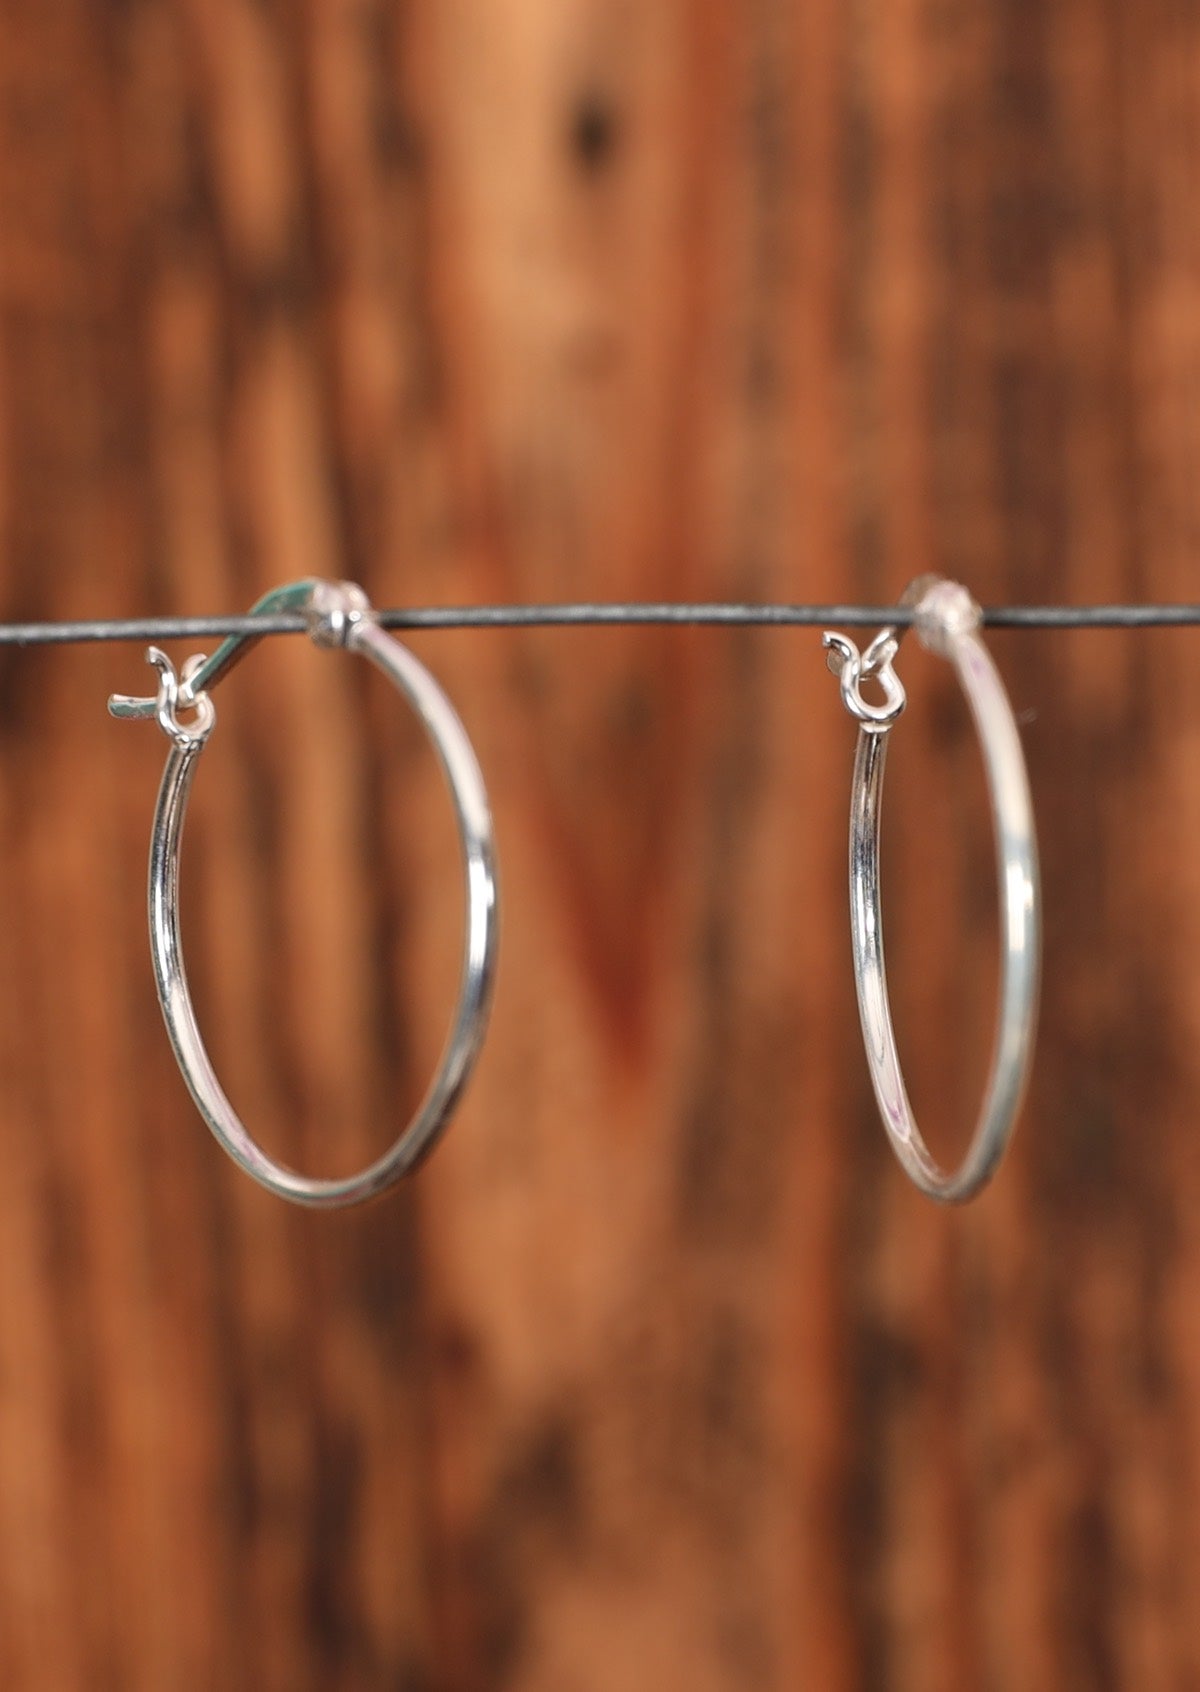 92.5% silver slim hoop earrings sitting on a wire for display.